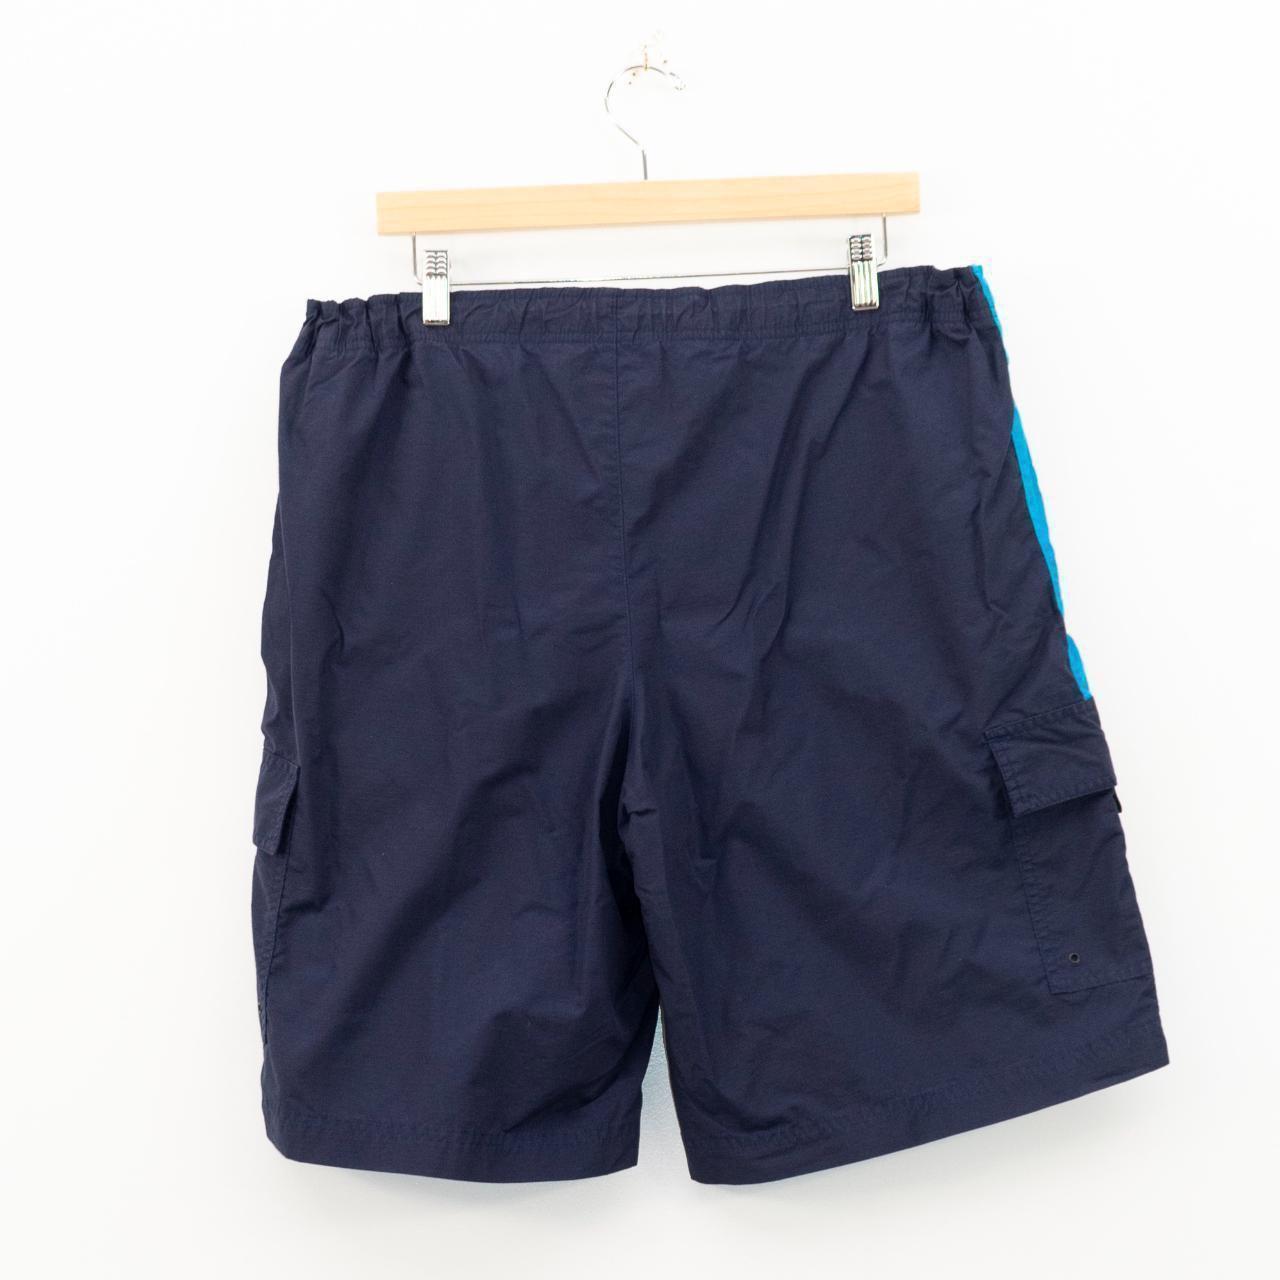 Nike Men's Navy and Blue Swim-briefs-shorts (2)